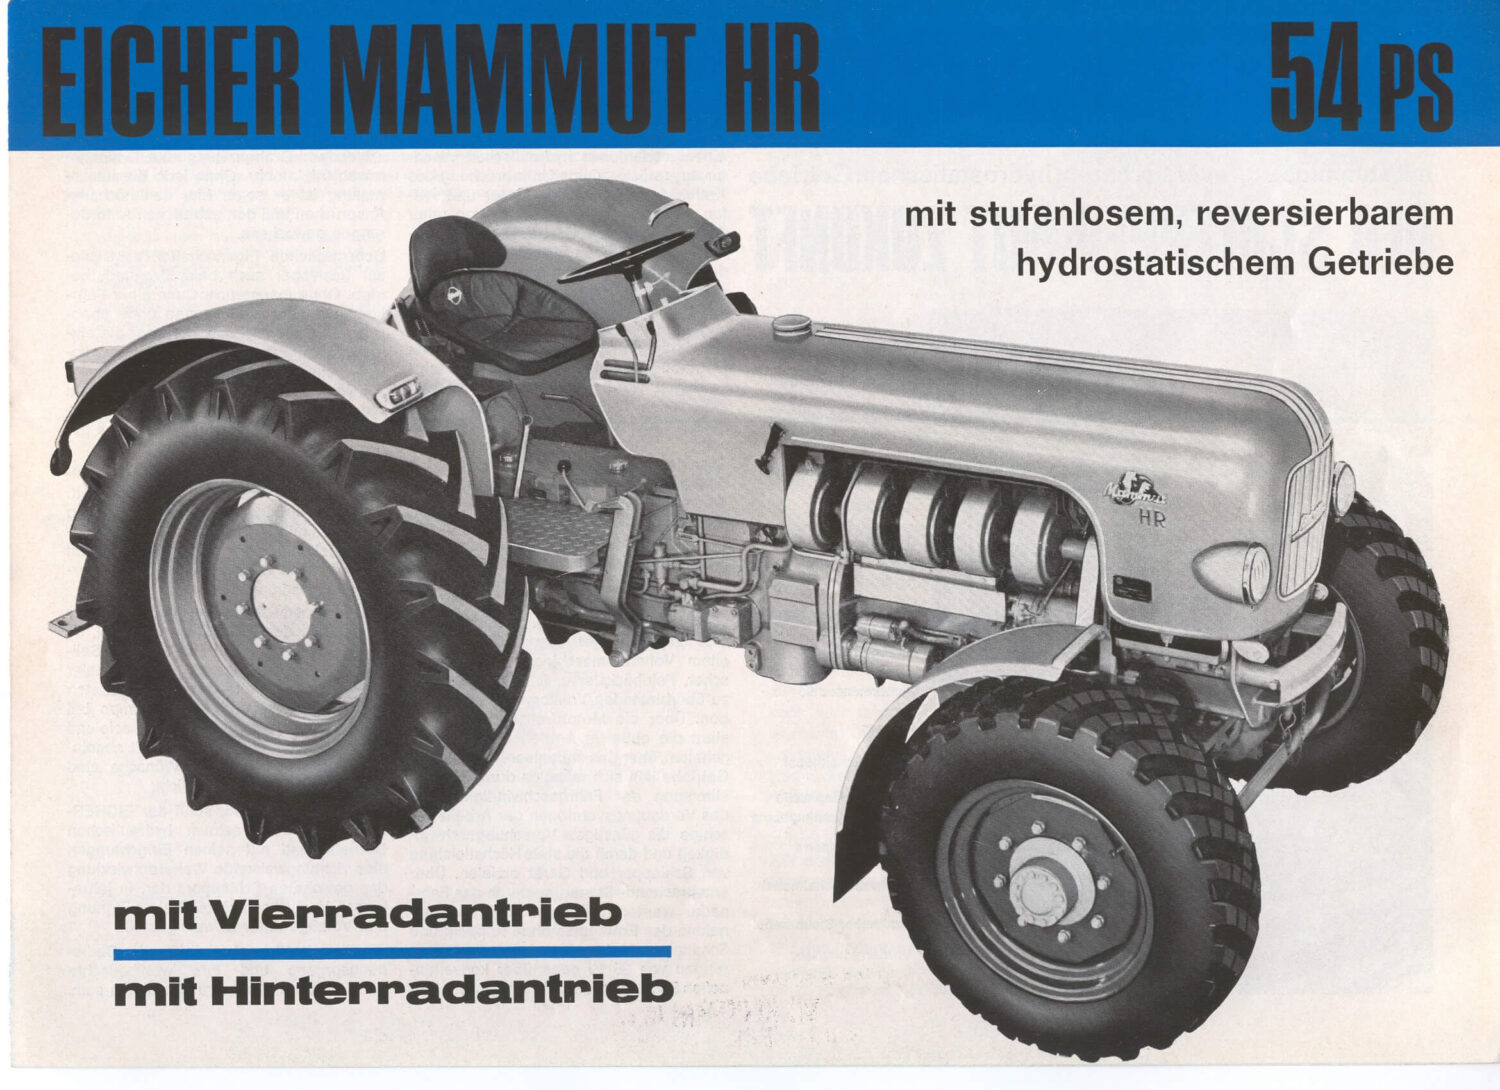 1967 Eicher Mammut HR 54 ps